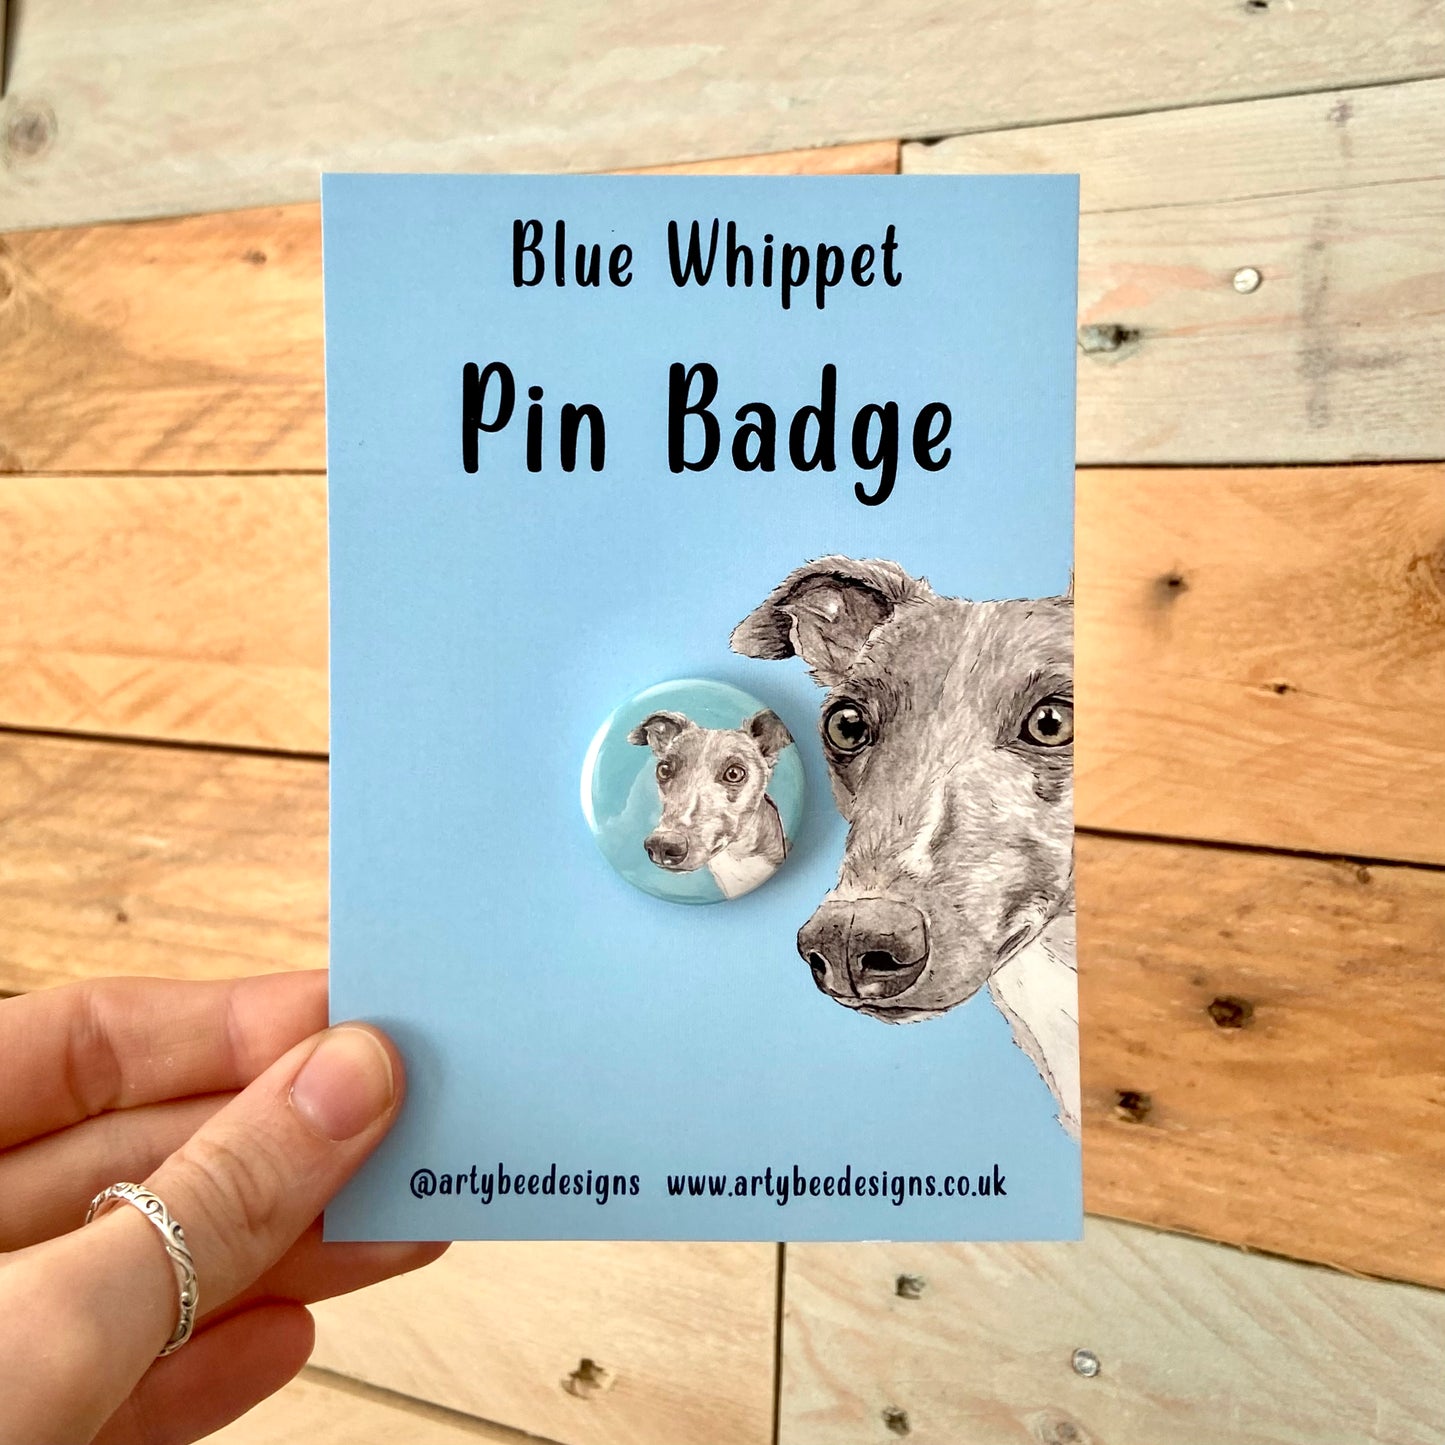 Blue Whippet Pin Badge